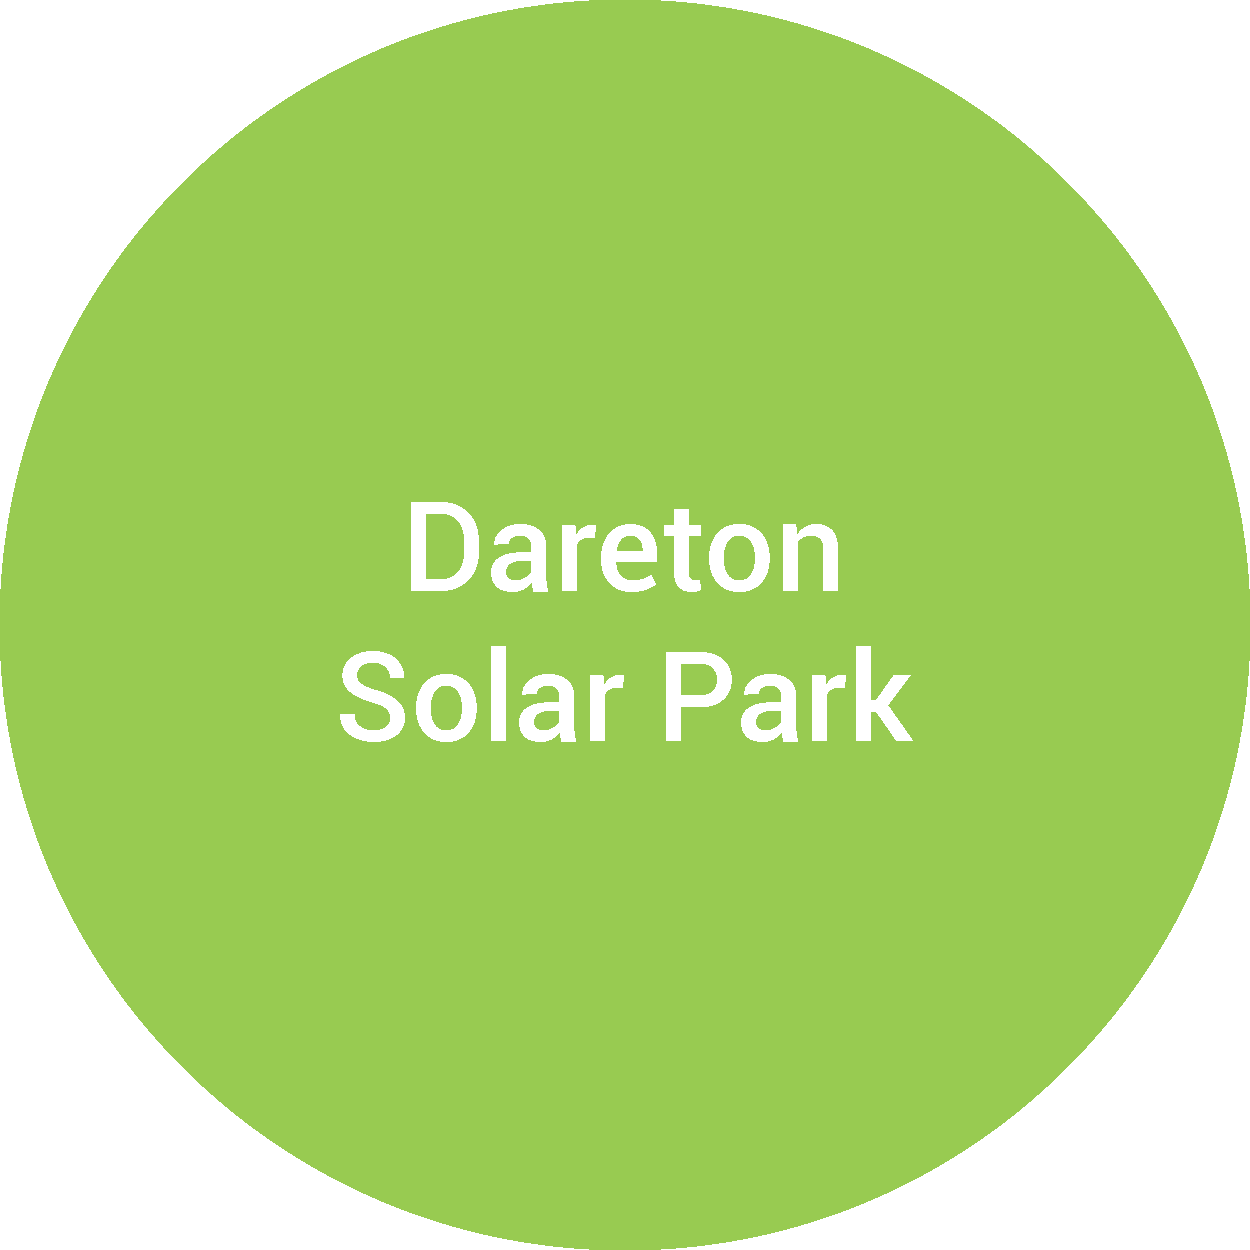 Dareton Solar Park